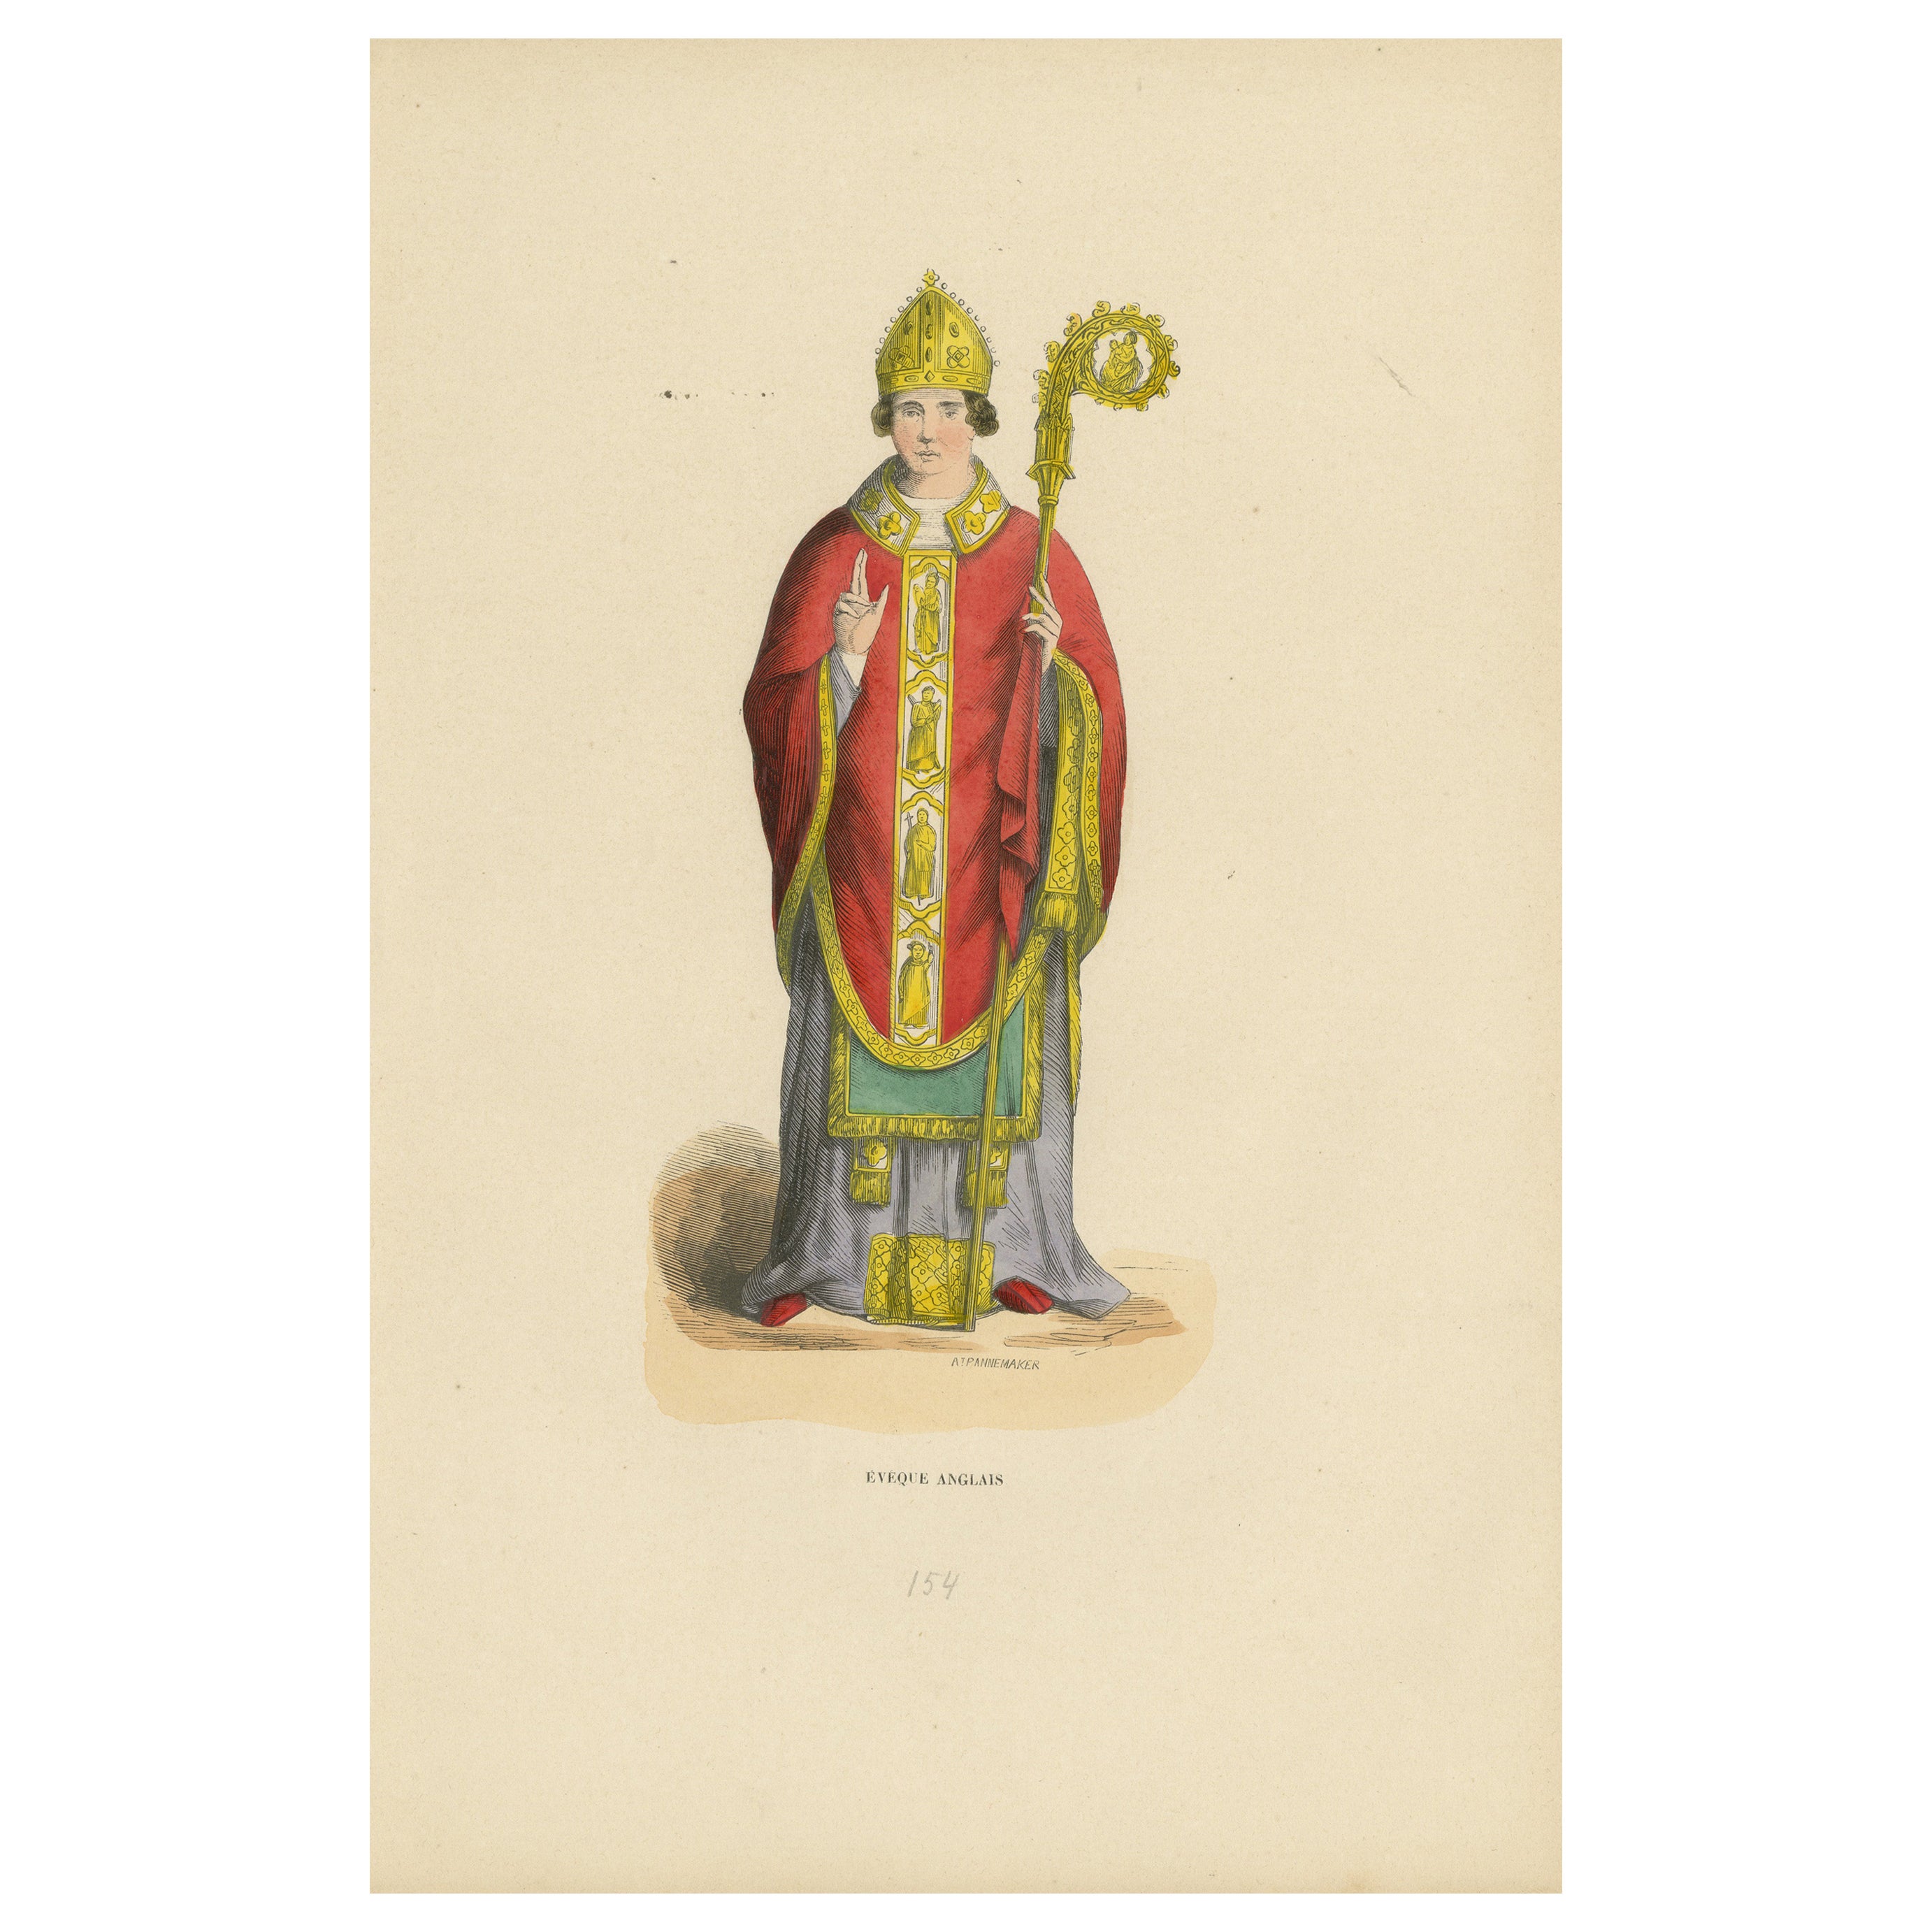 Episcopal Splendor: An English Bishop in 'Costume du Moyen Âge, 1847